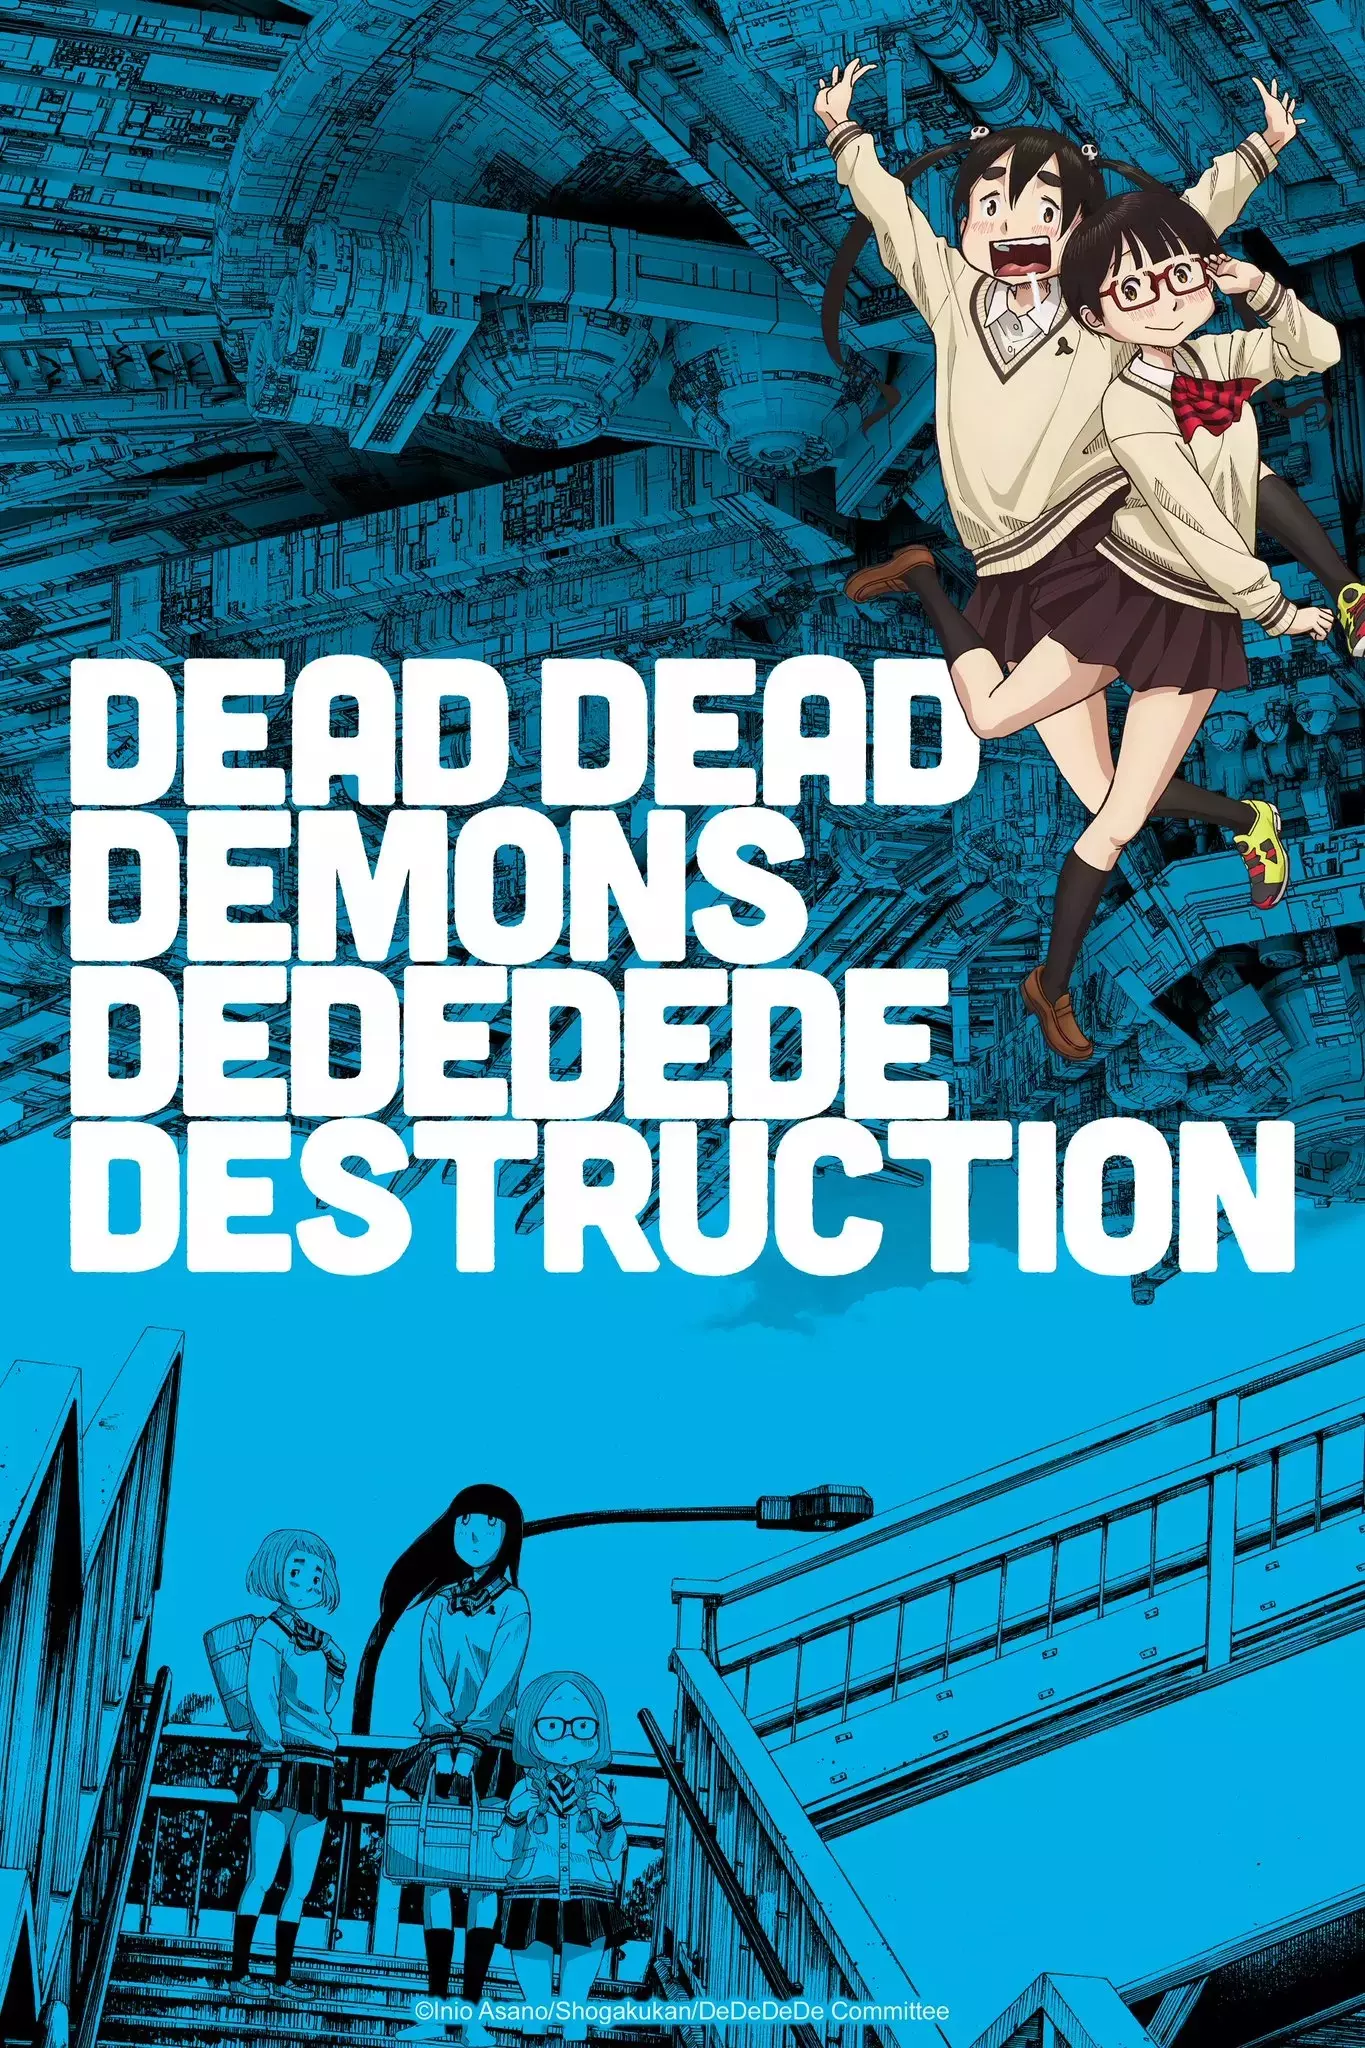 vidéo manga - Dead Dead Demon’s DeDeDeDe Destruction - ONA